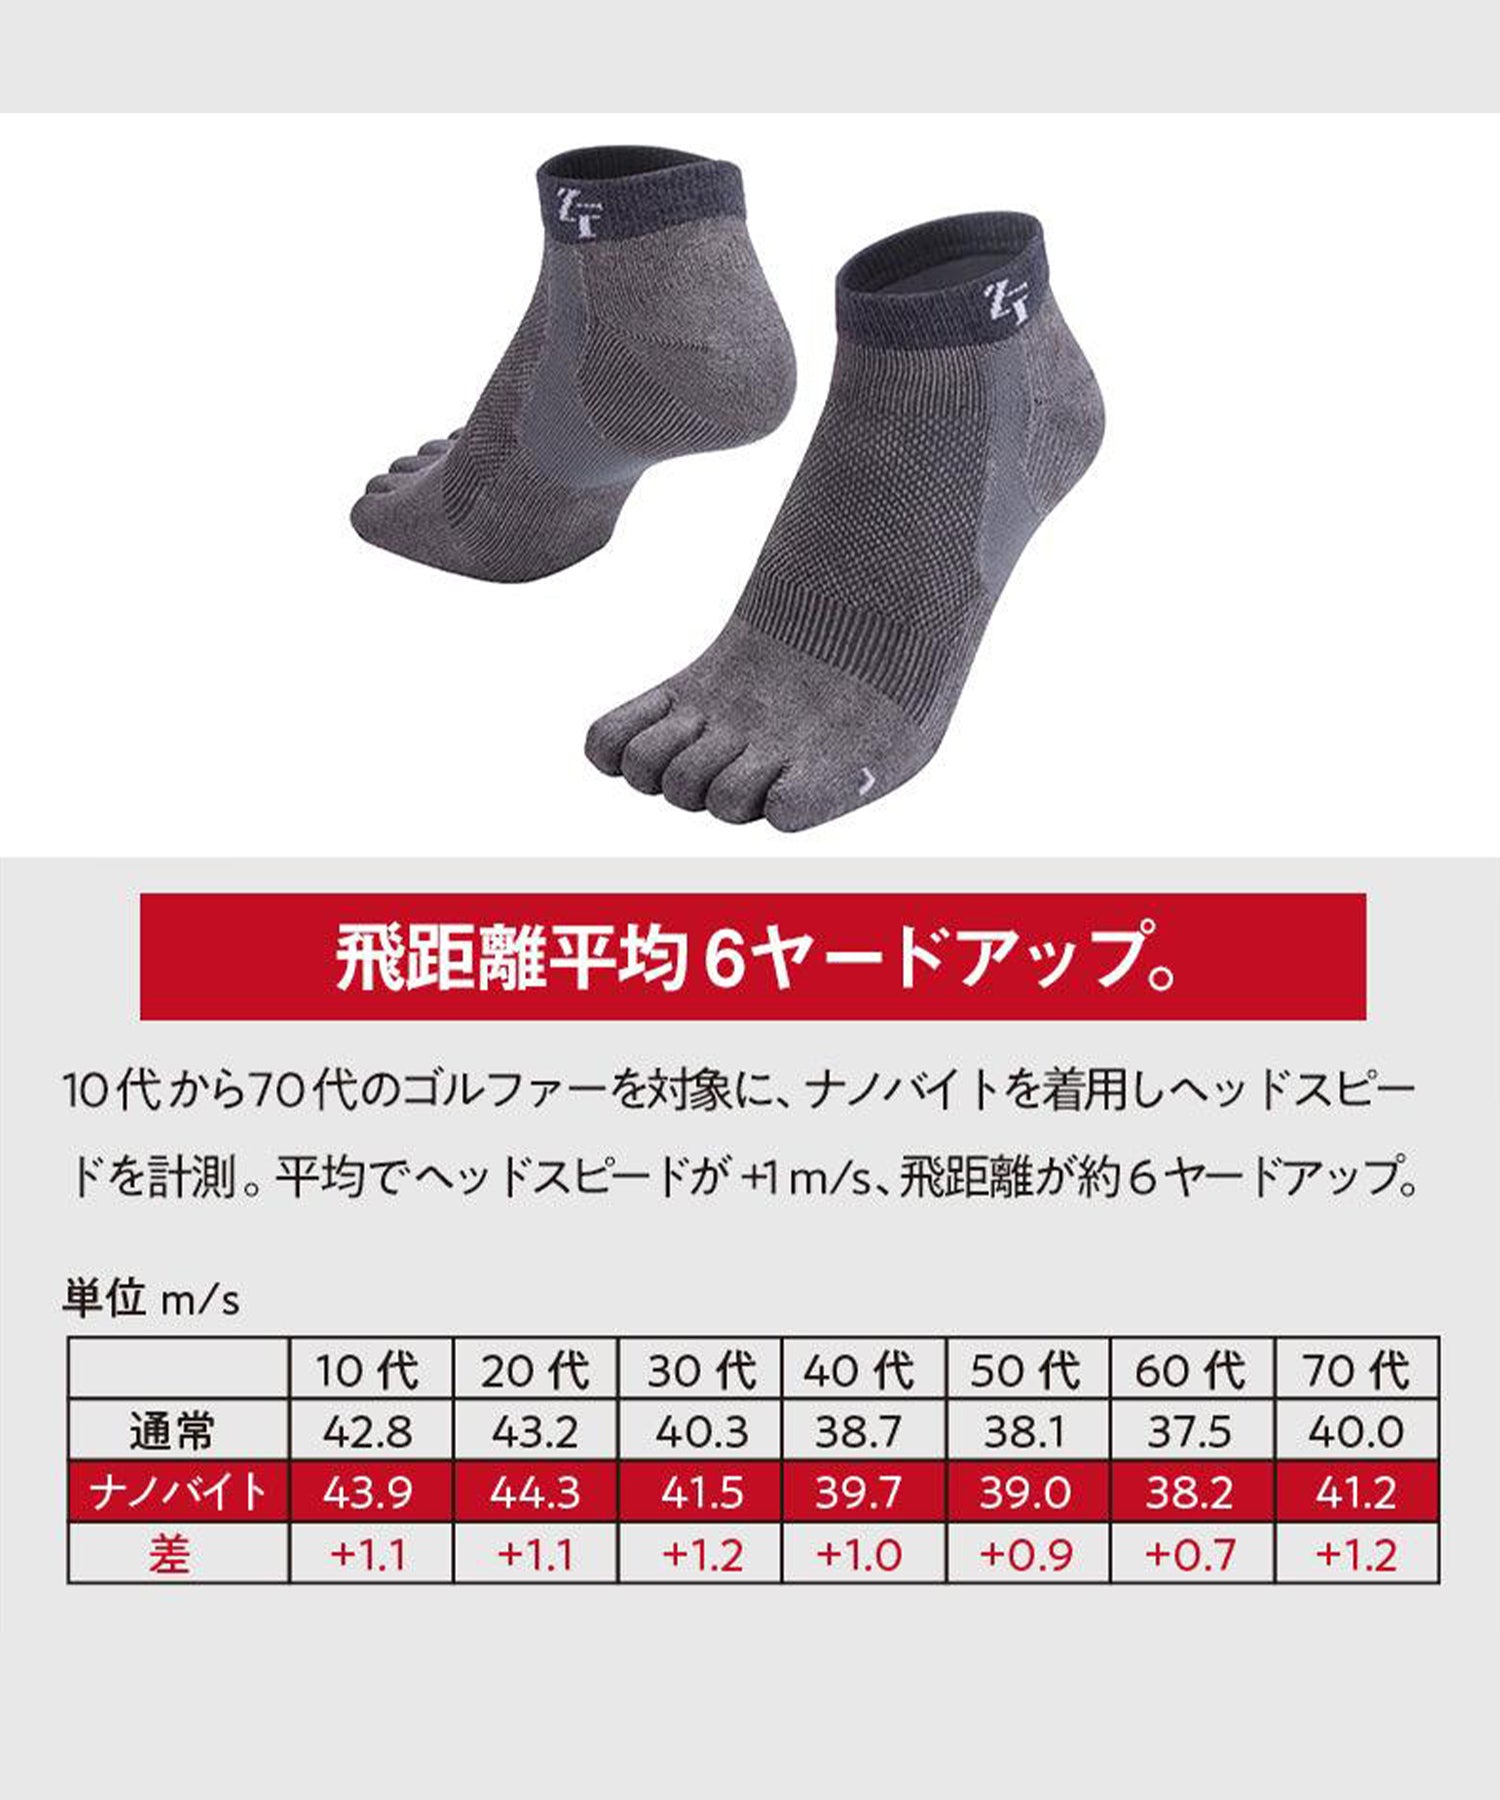 nanobyte socks short